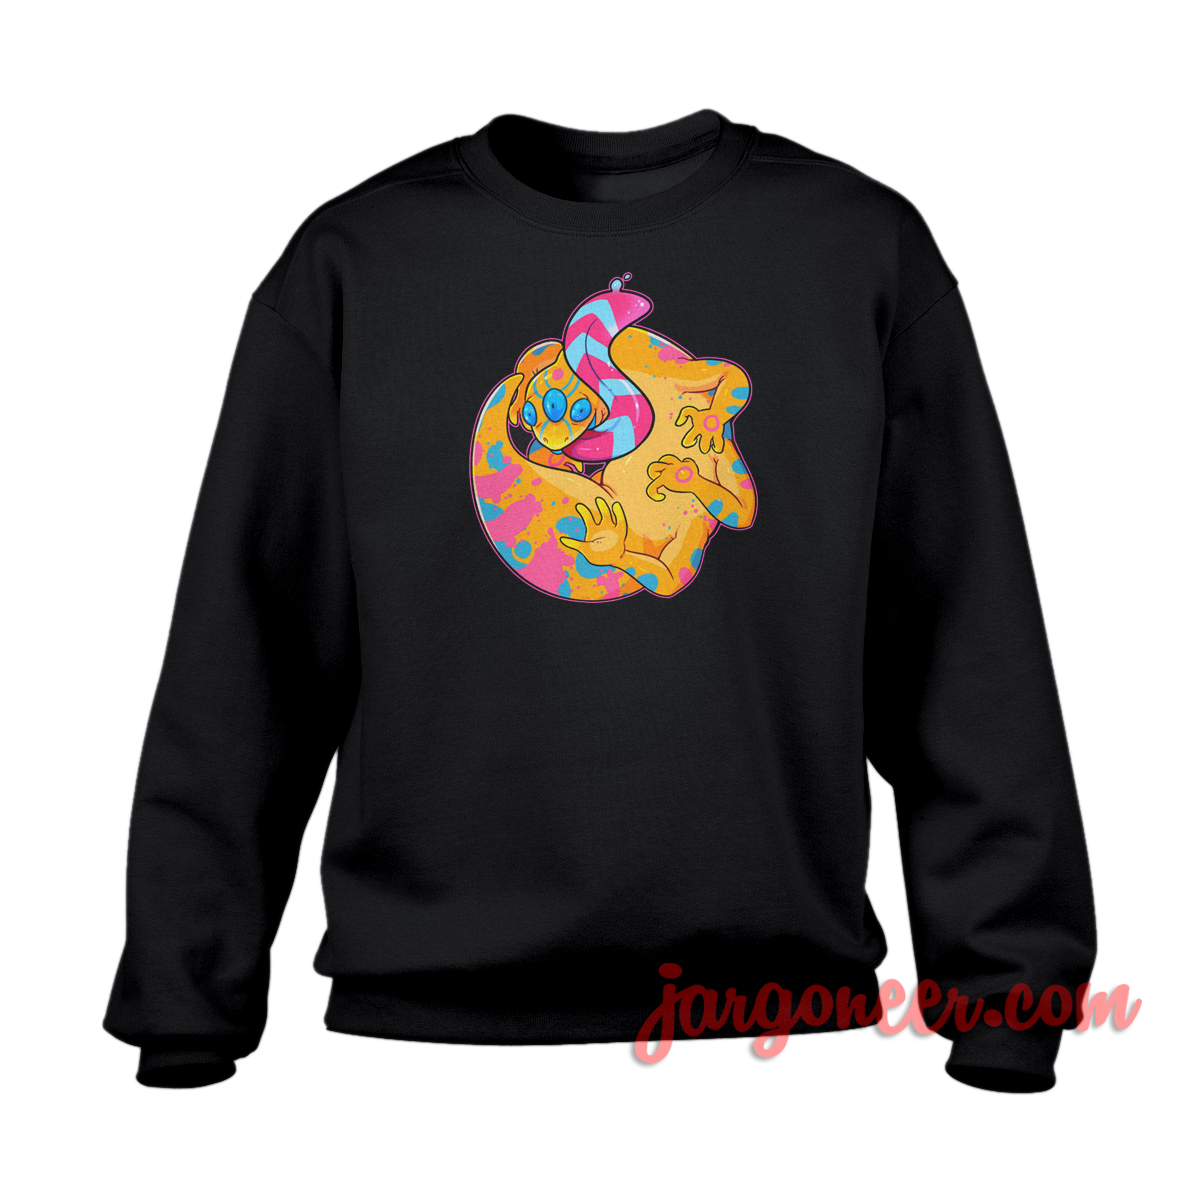 Jawbreaker Rush Gecko - Shop Unique Graphic Cool Shirt Designs